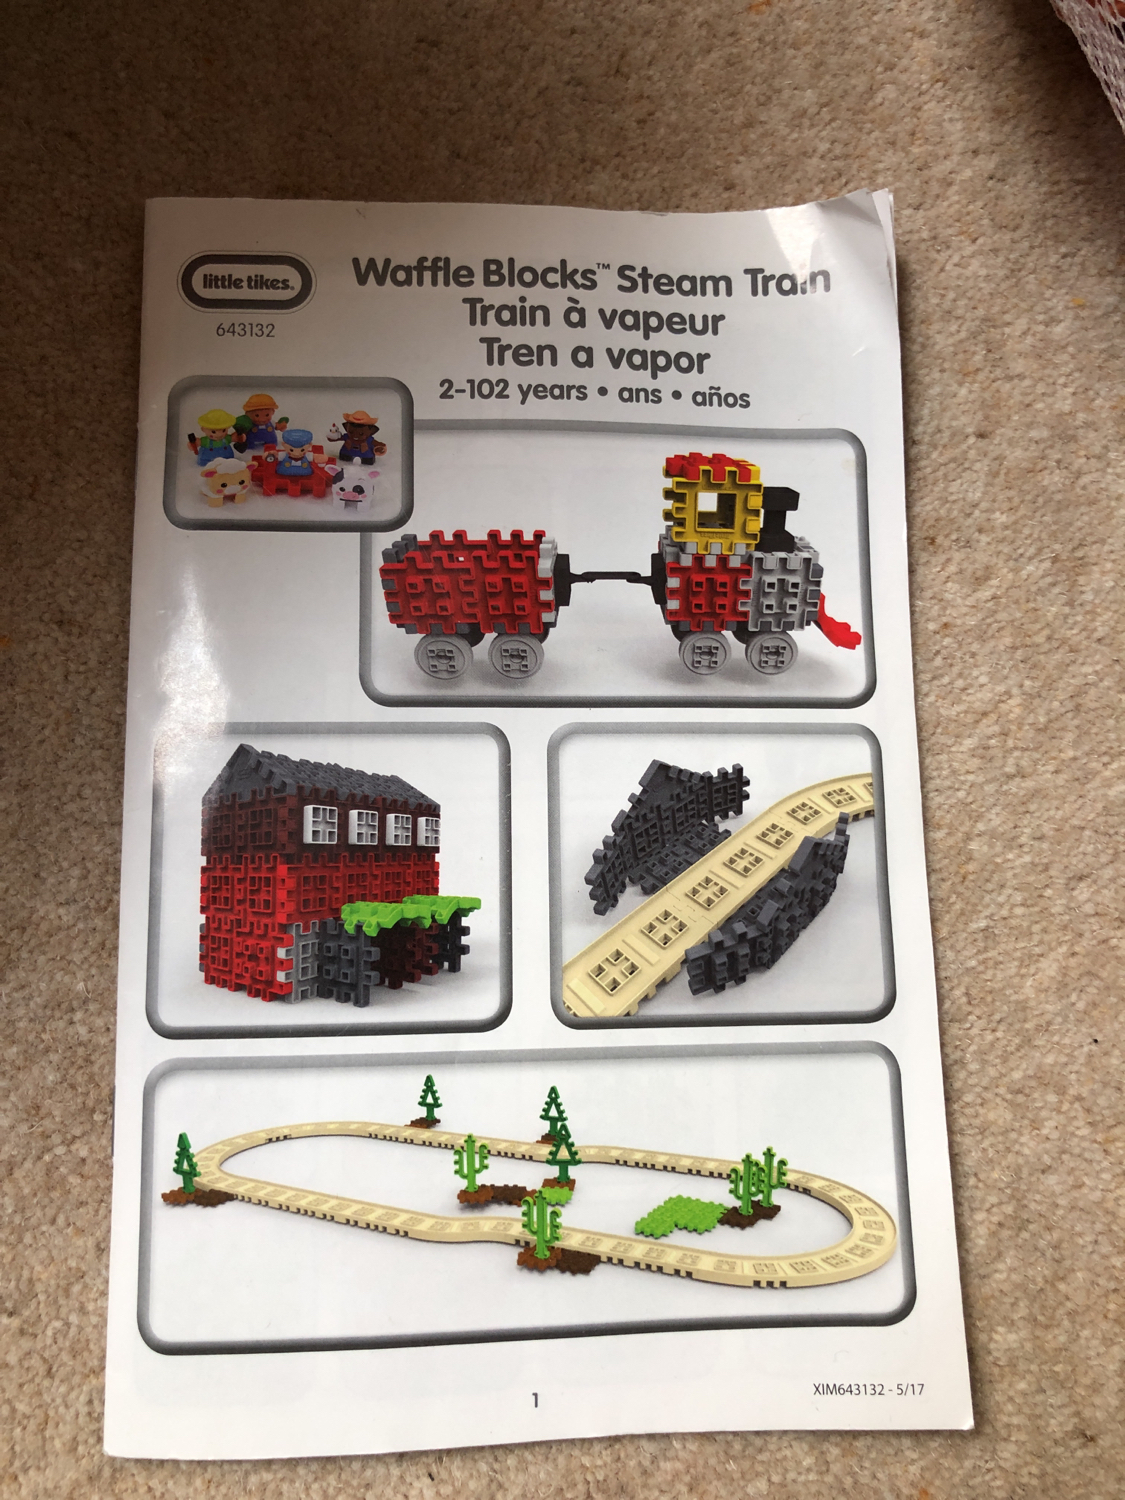 waffle blocks steam train instructions